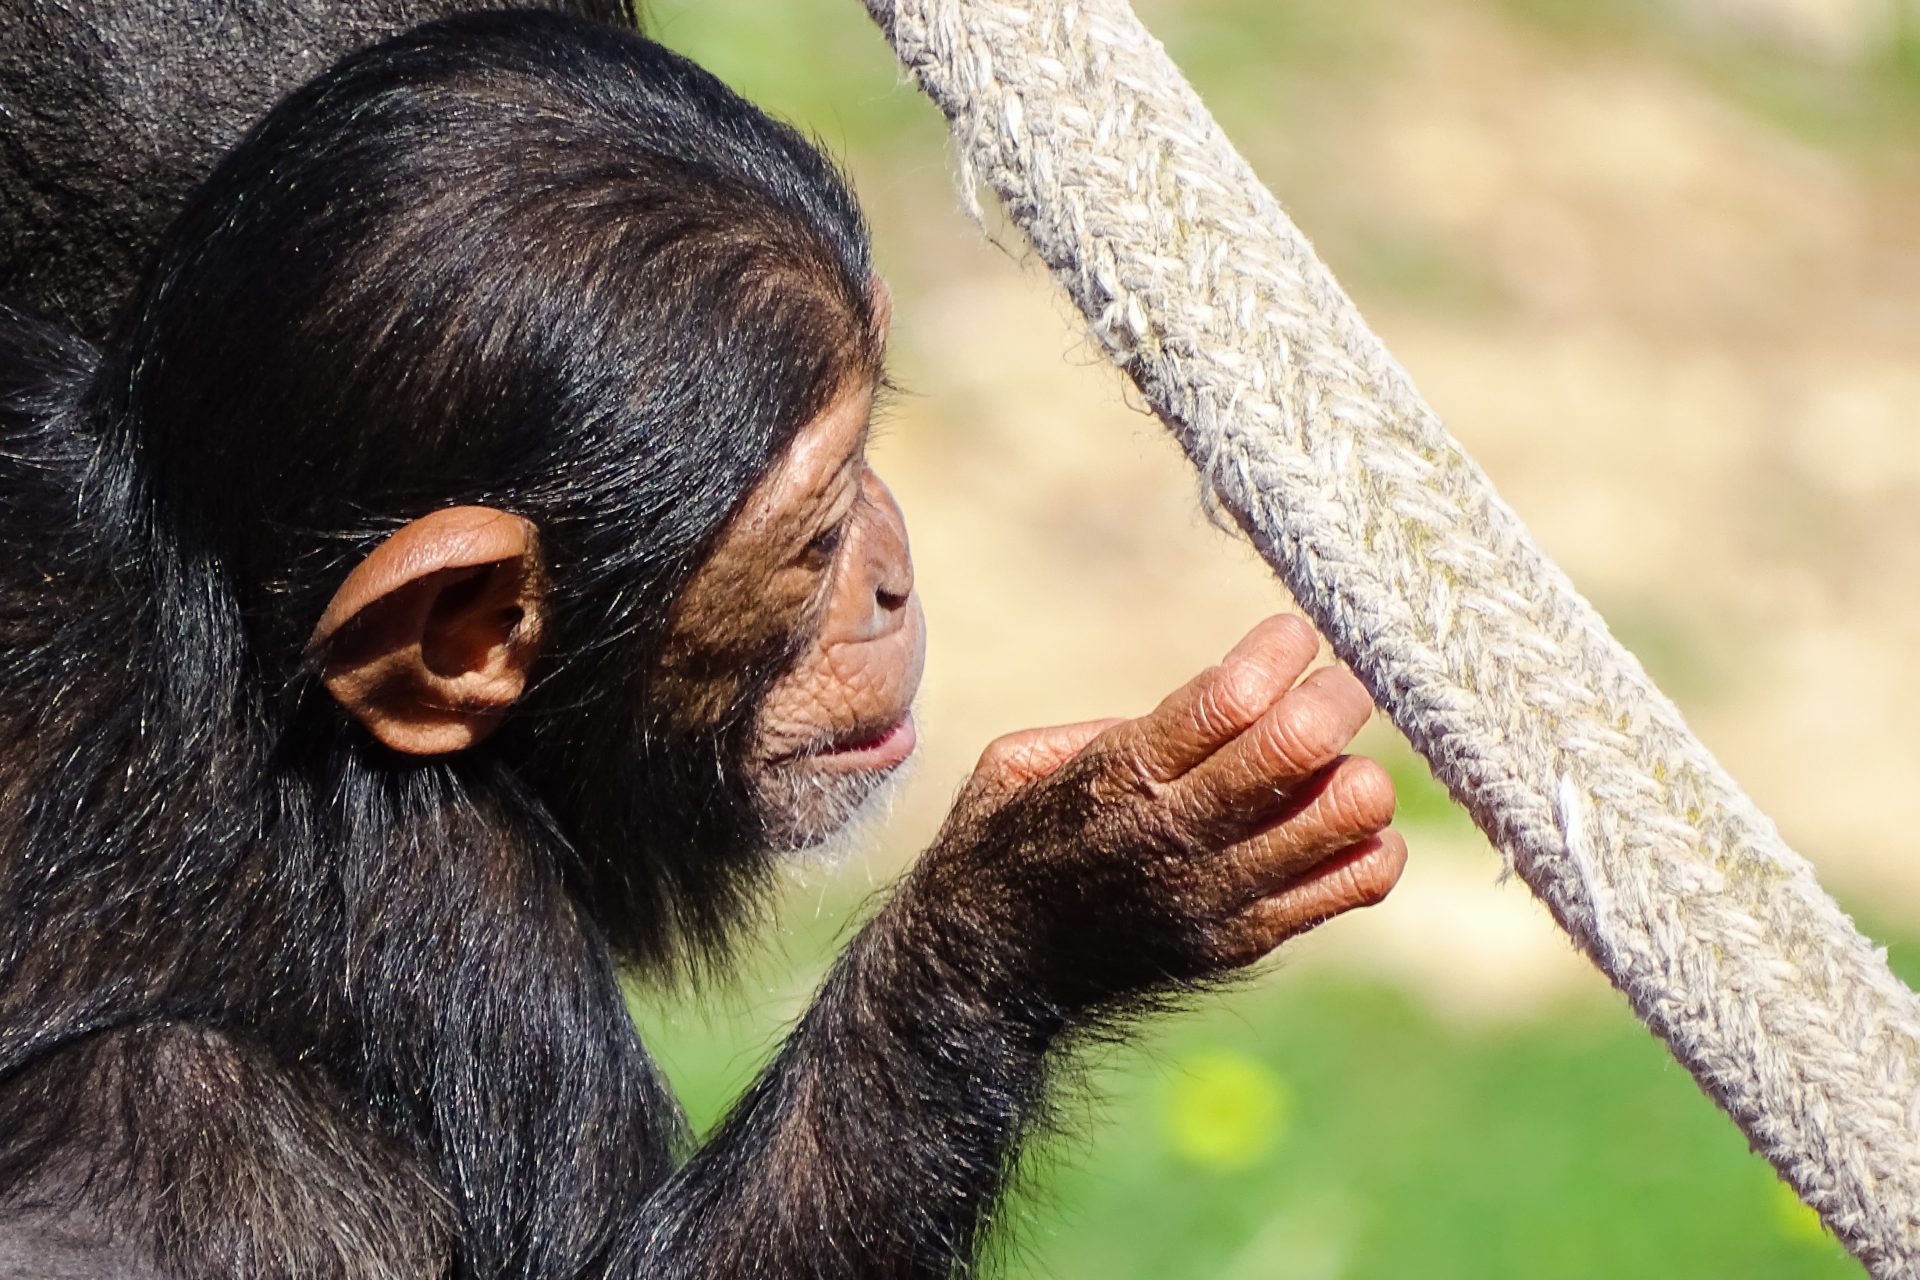 Caza comercial para vender carne de chimpancé